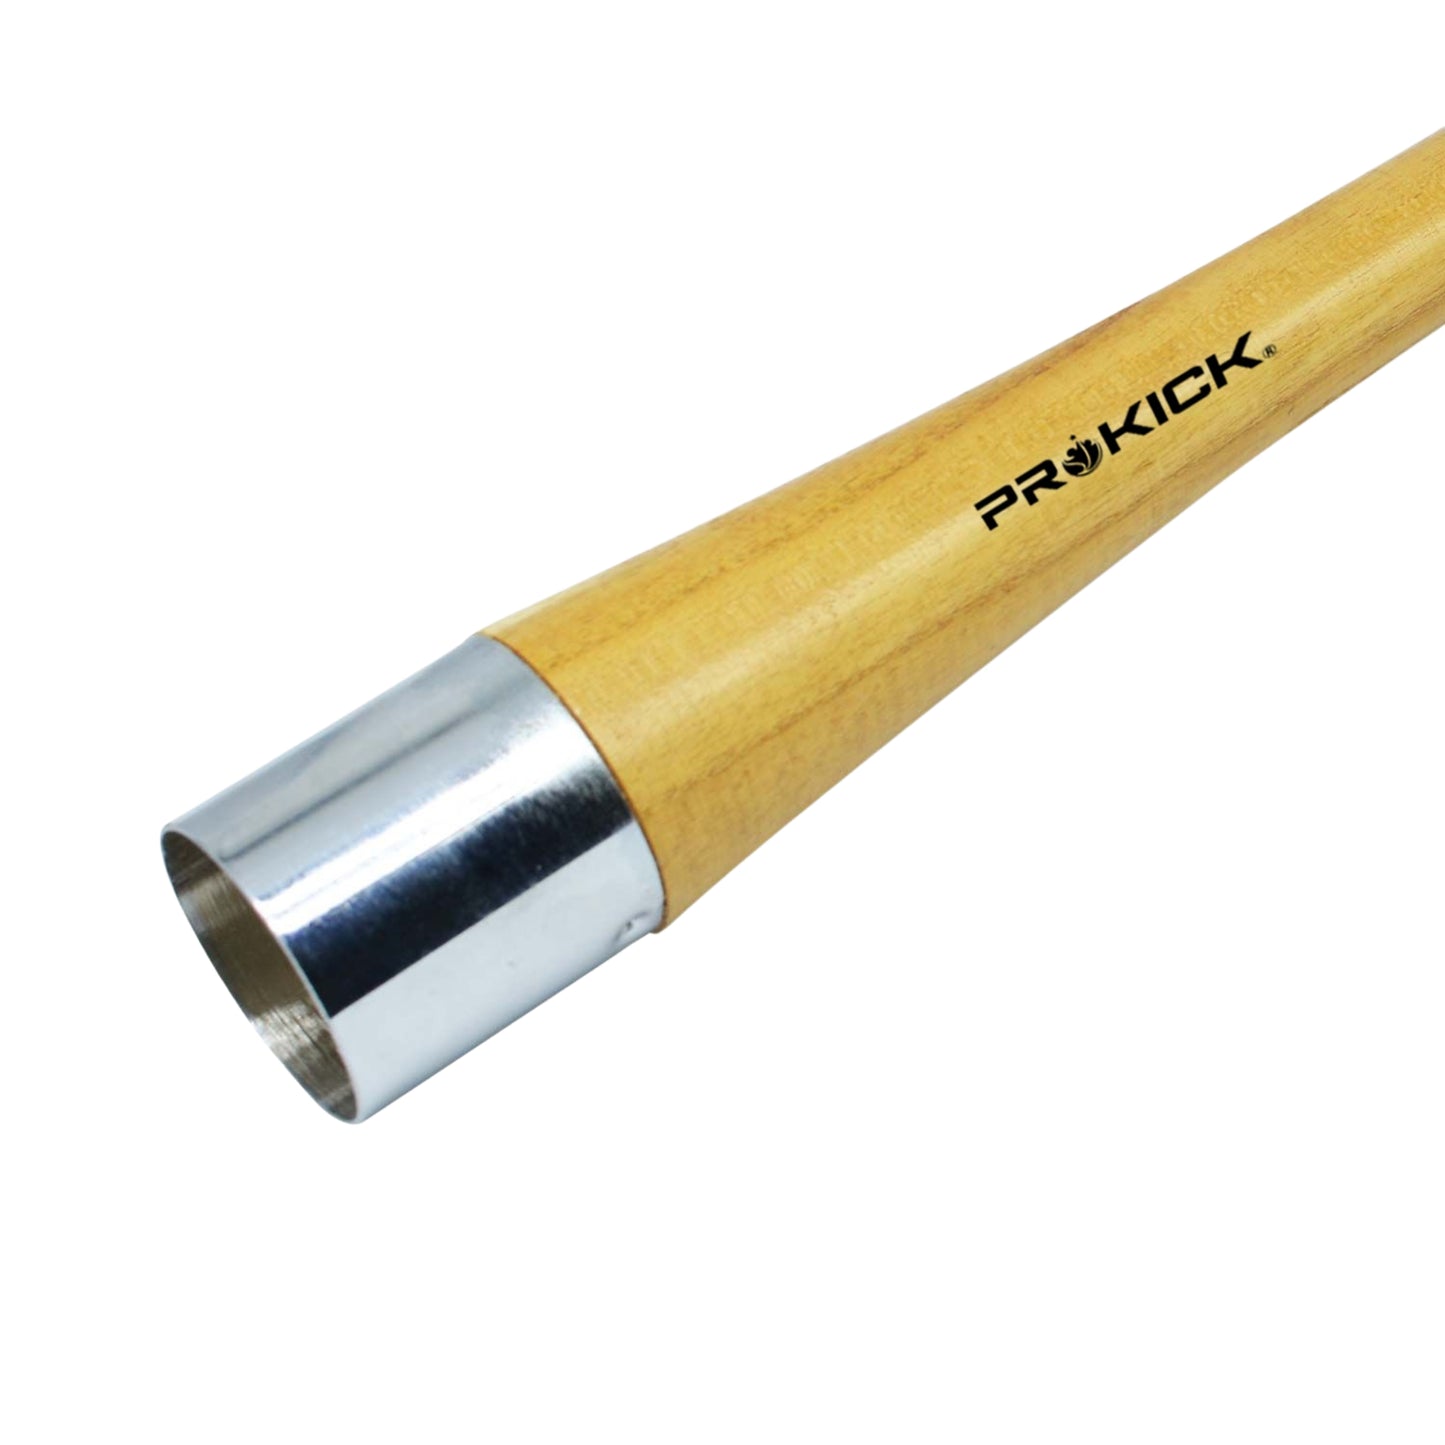 Prokick Cricket Bat Grip Applicator Cone - Best Price online Prokicksports.com